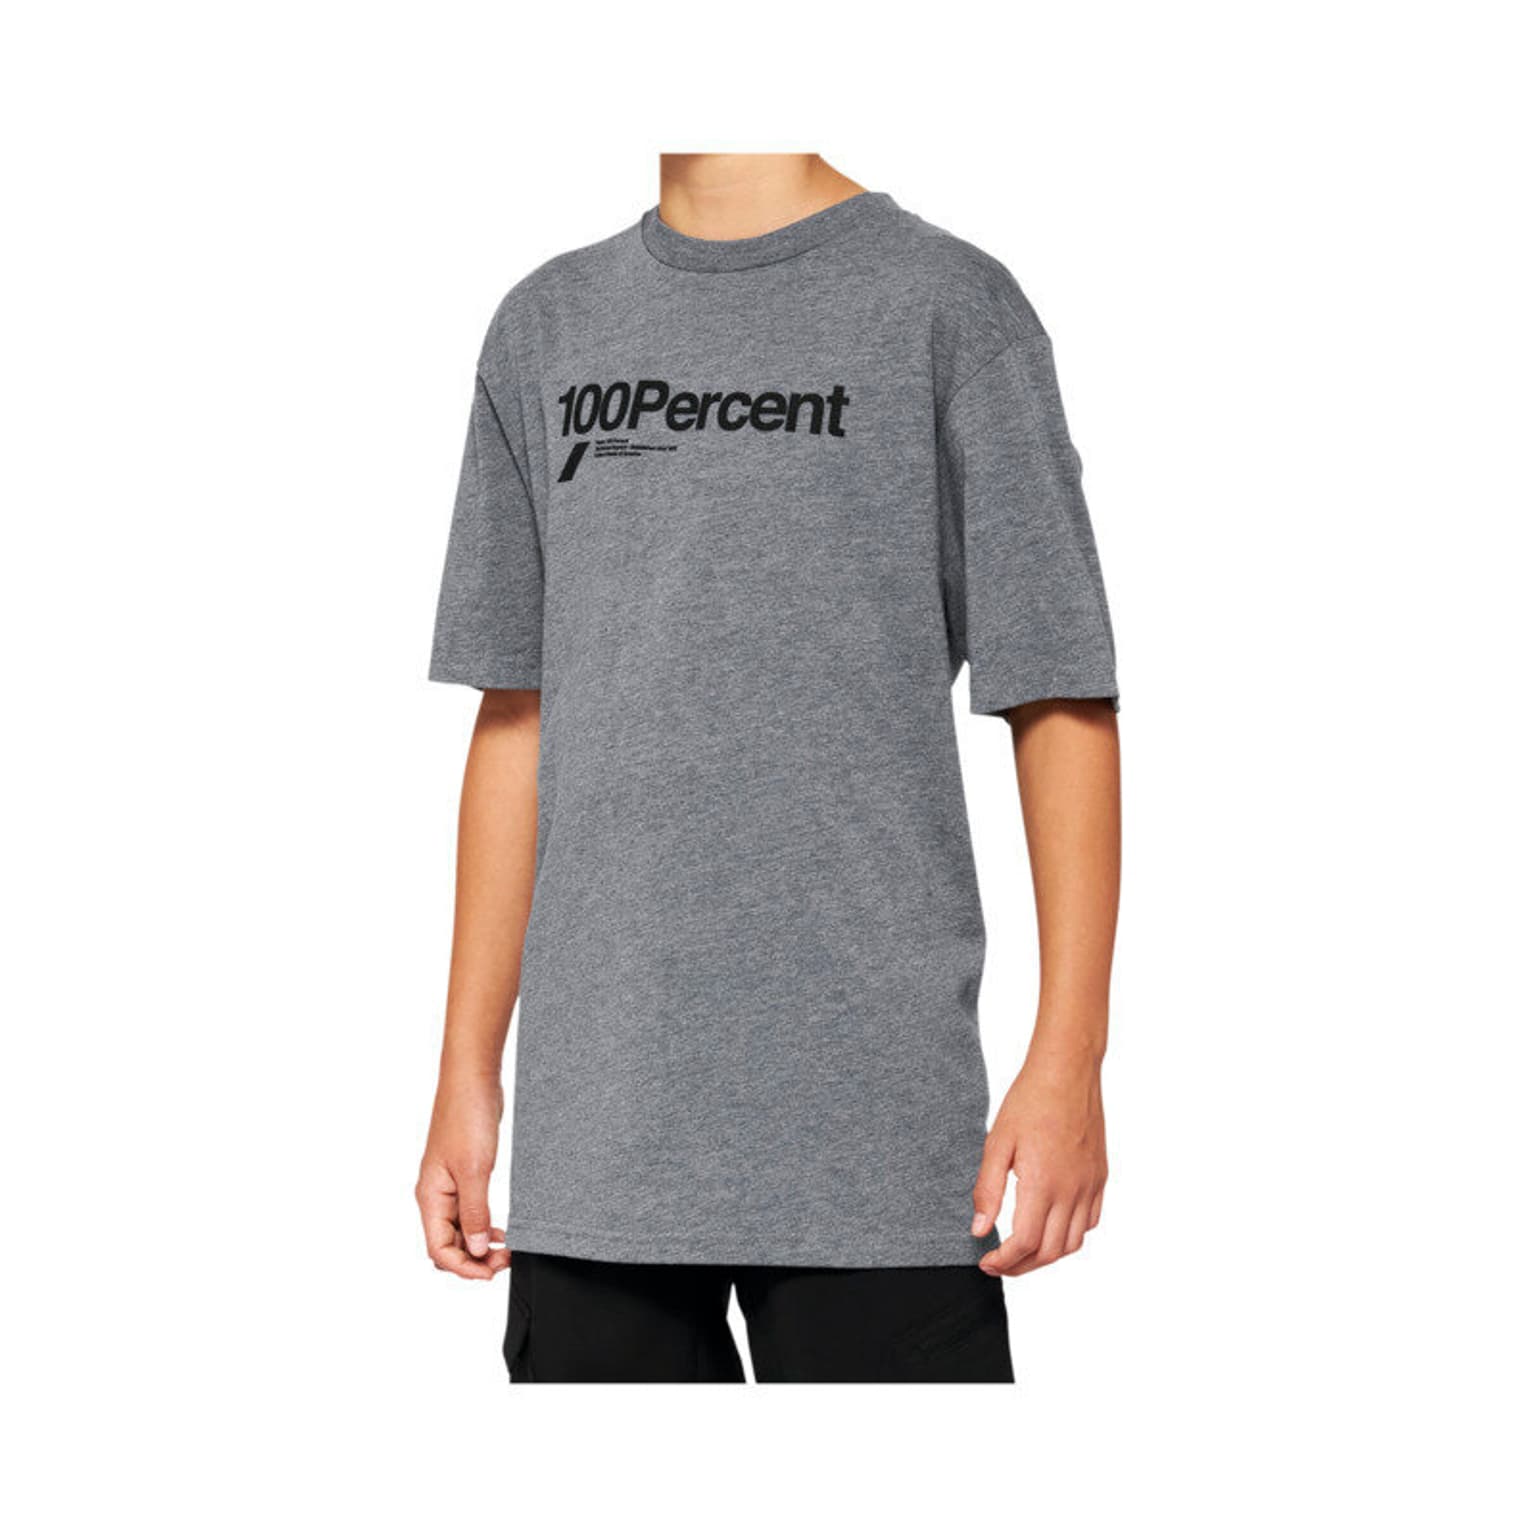 100% 100% Manifesto Youth T-Shirt grigio-chiaro 1